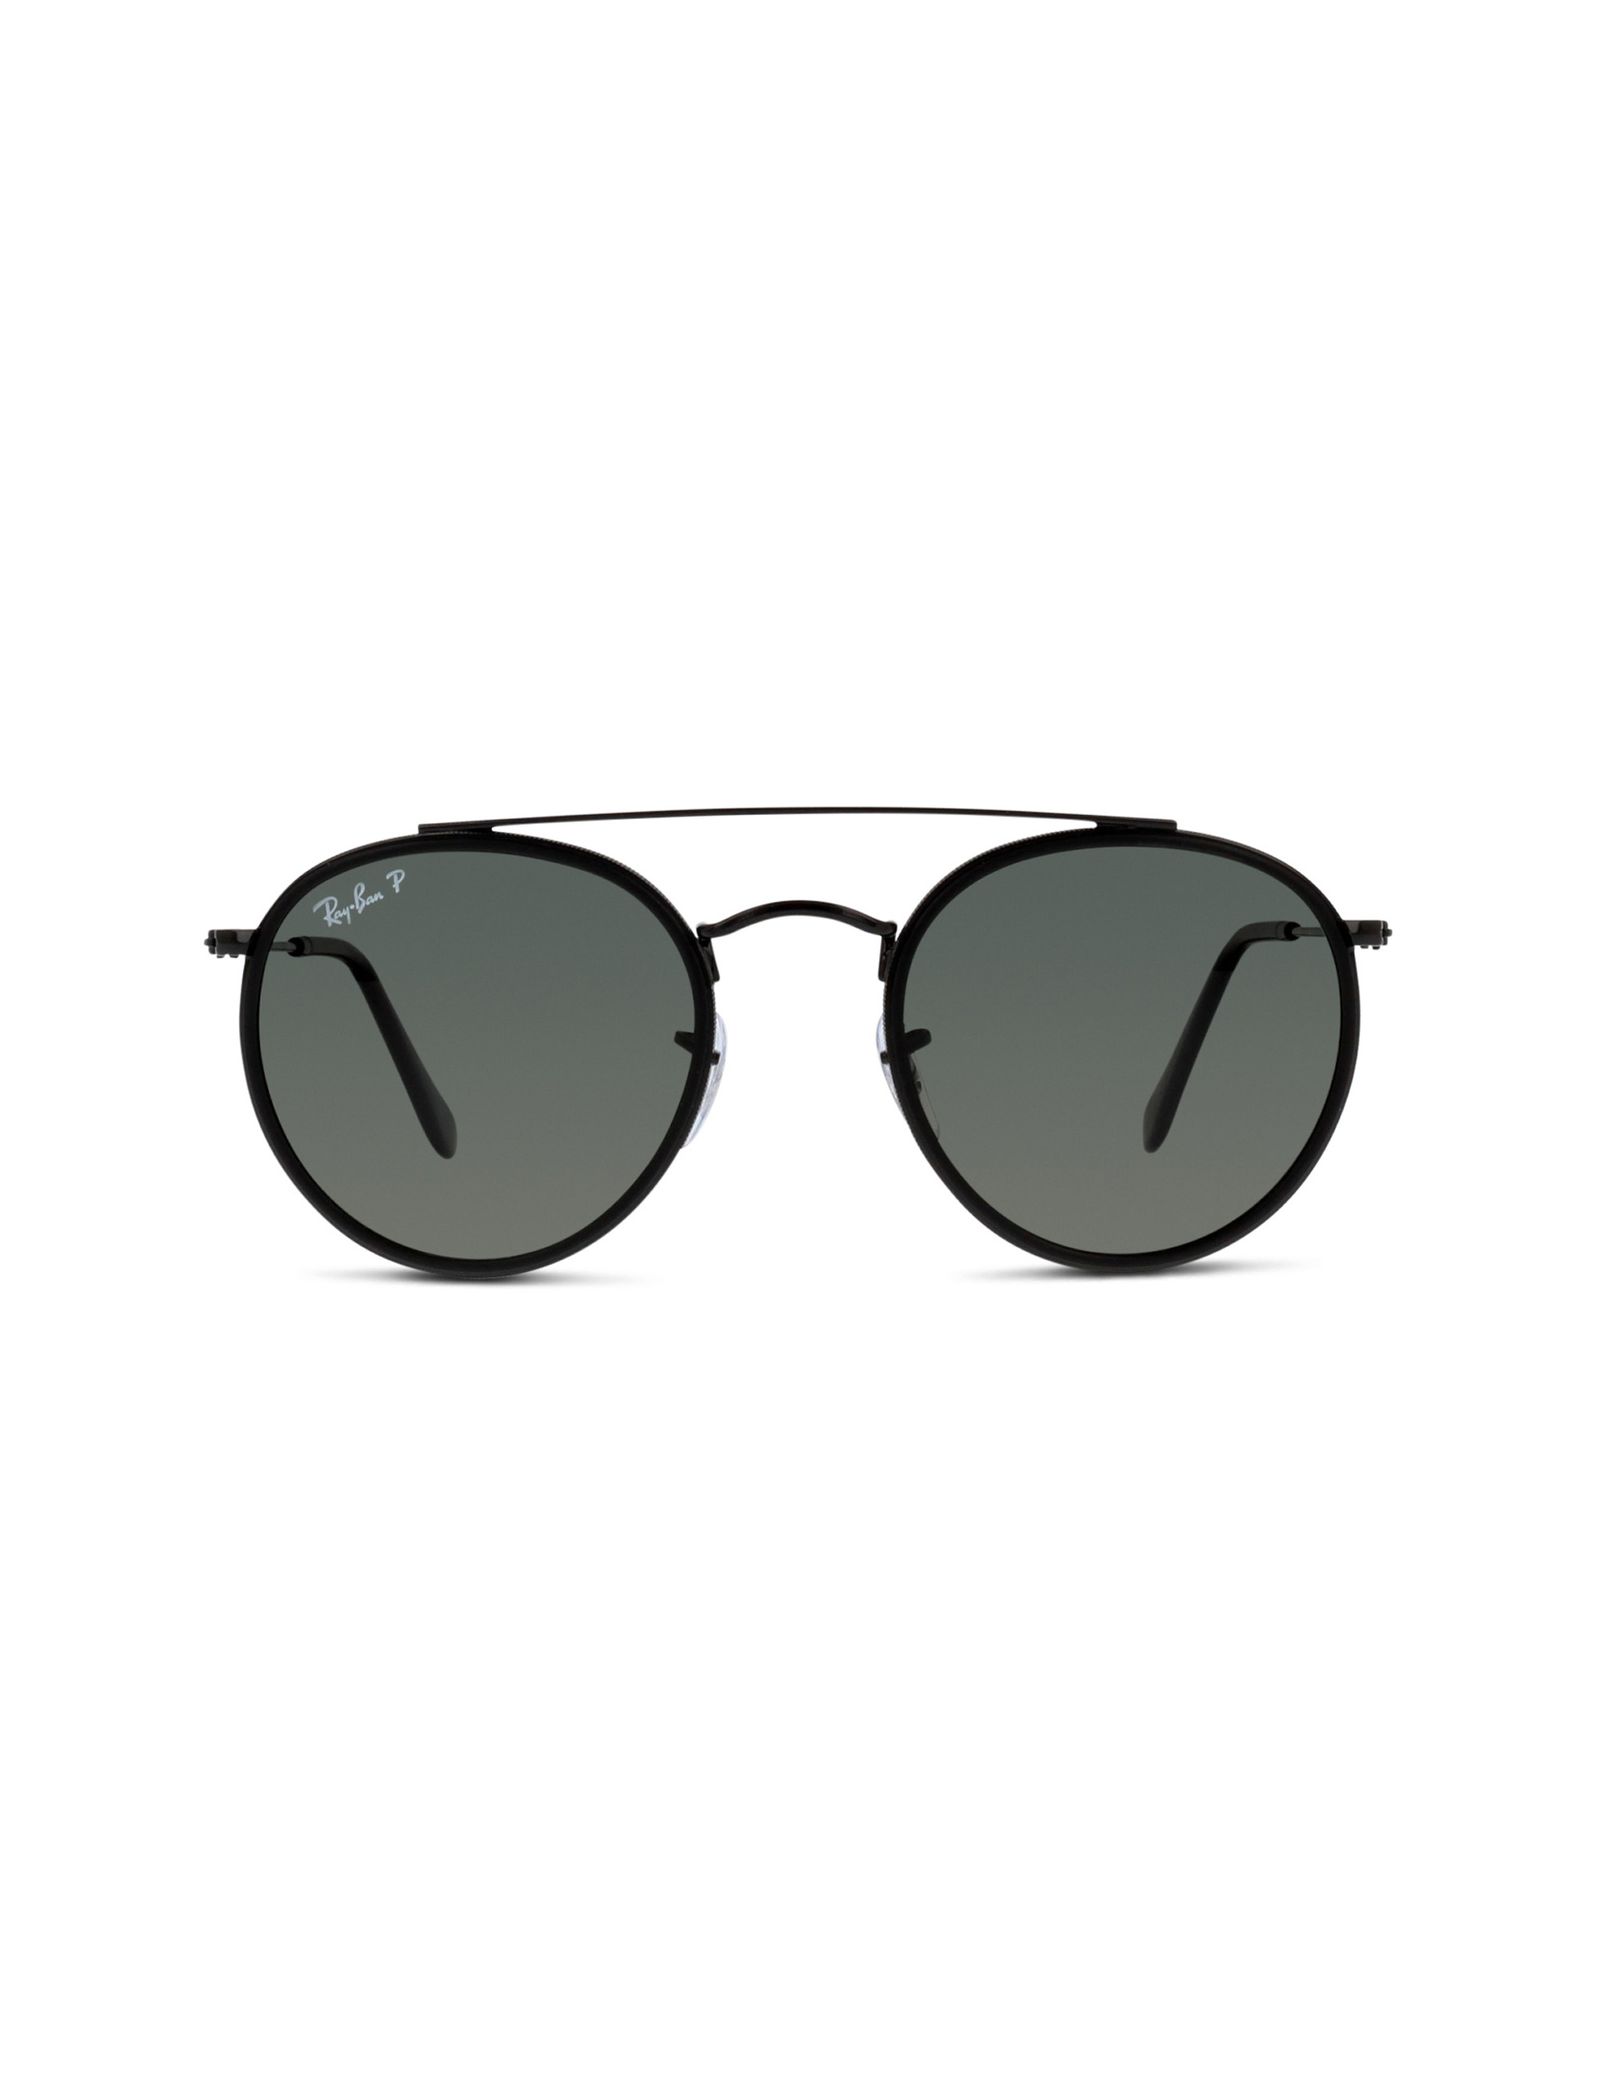 عینک آفتابی ری بن مدل 3647-2 - مشکی - 2